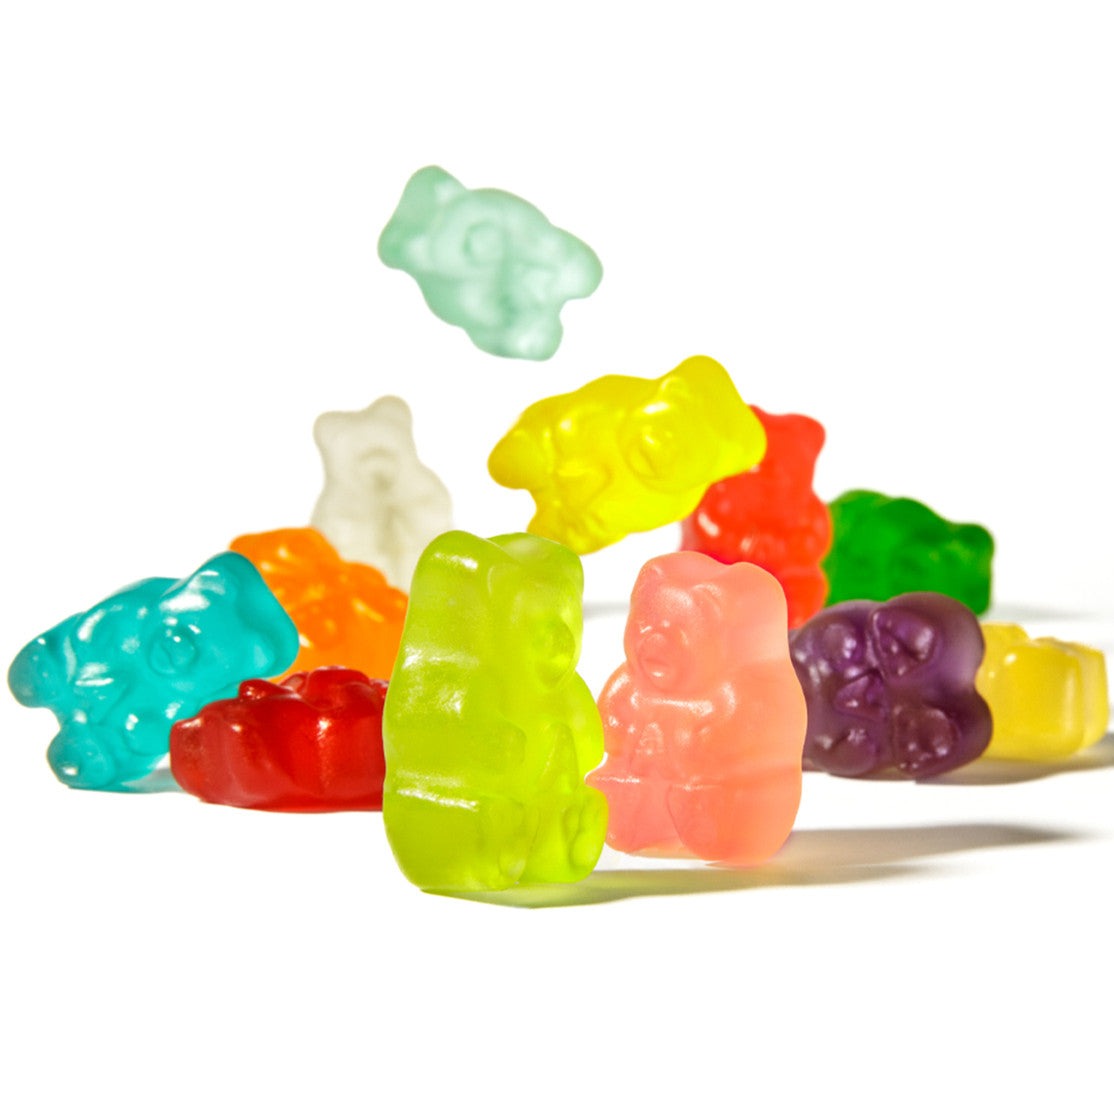 12 Flavor Gummi Bears